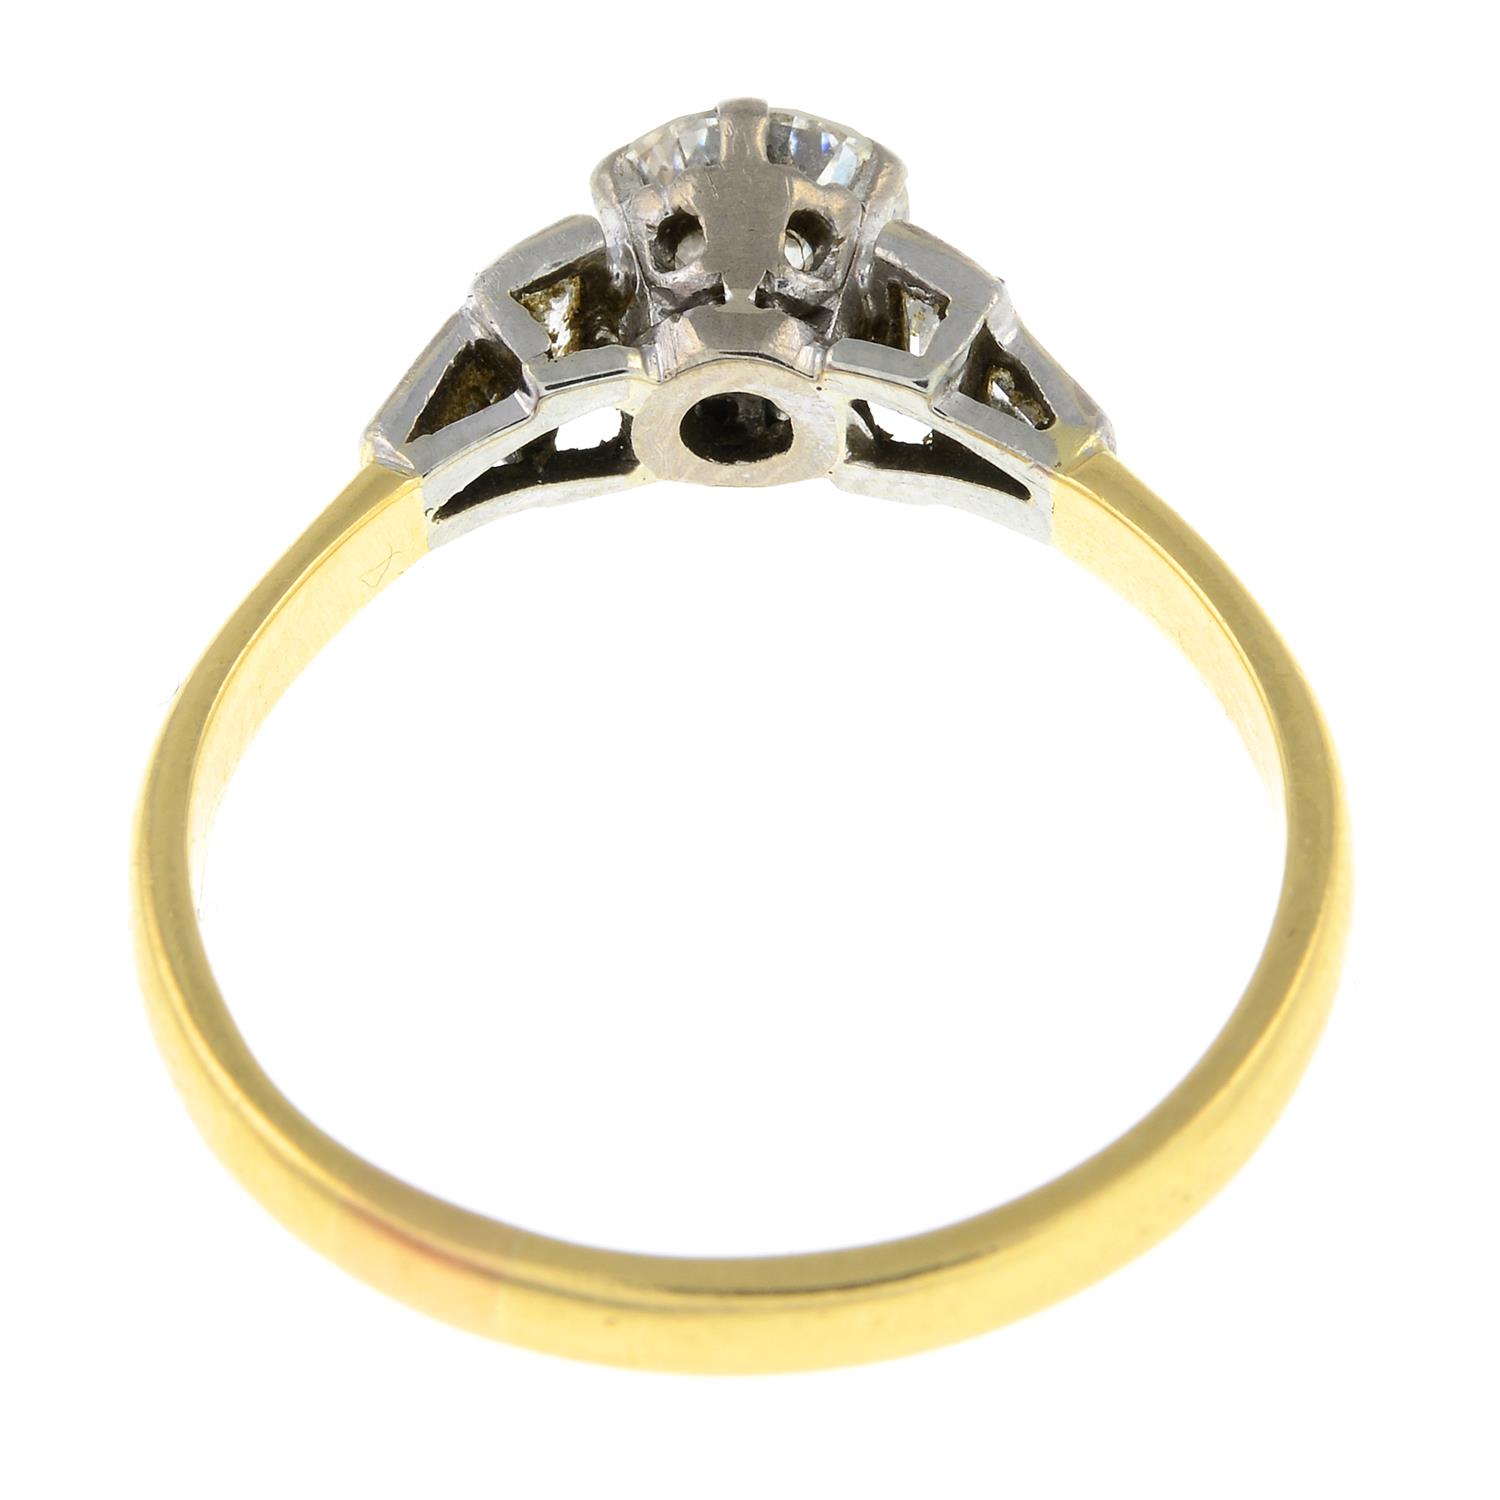 18ct gold vari-cut diamond ring - Image 2 of 2